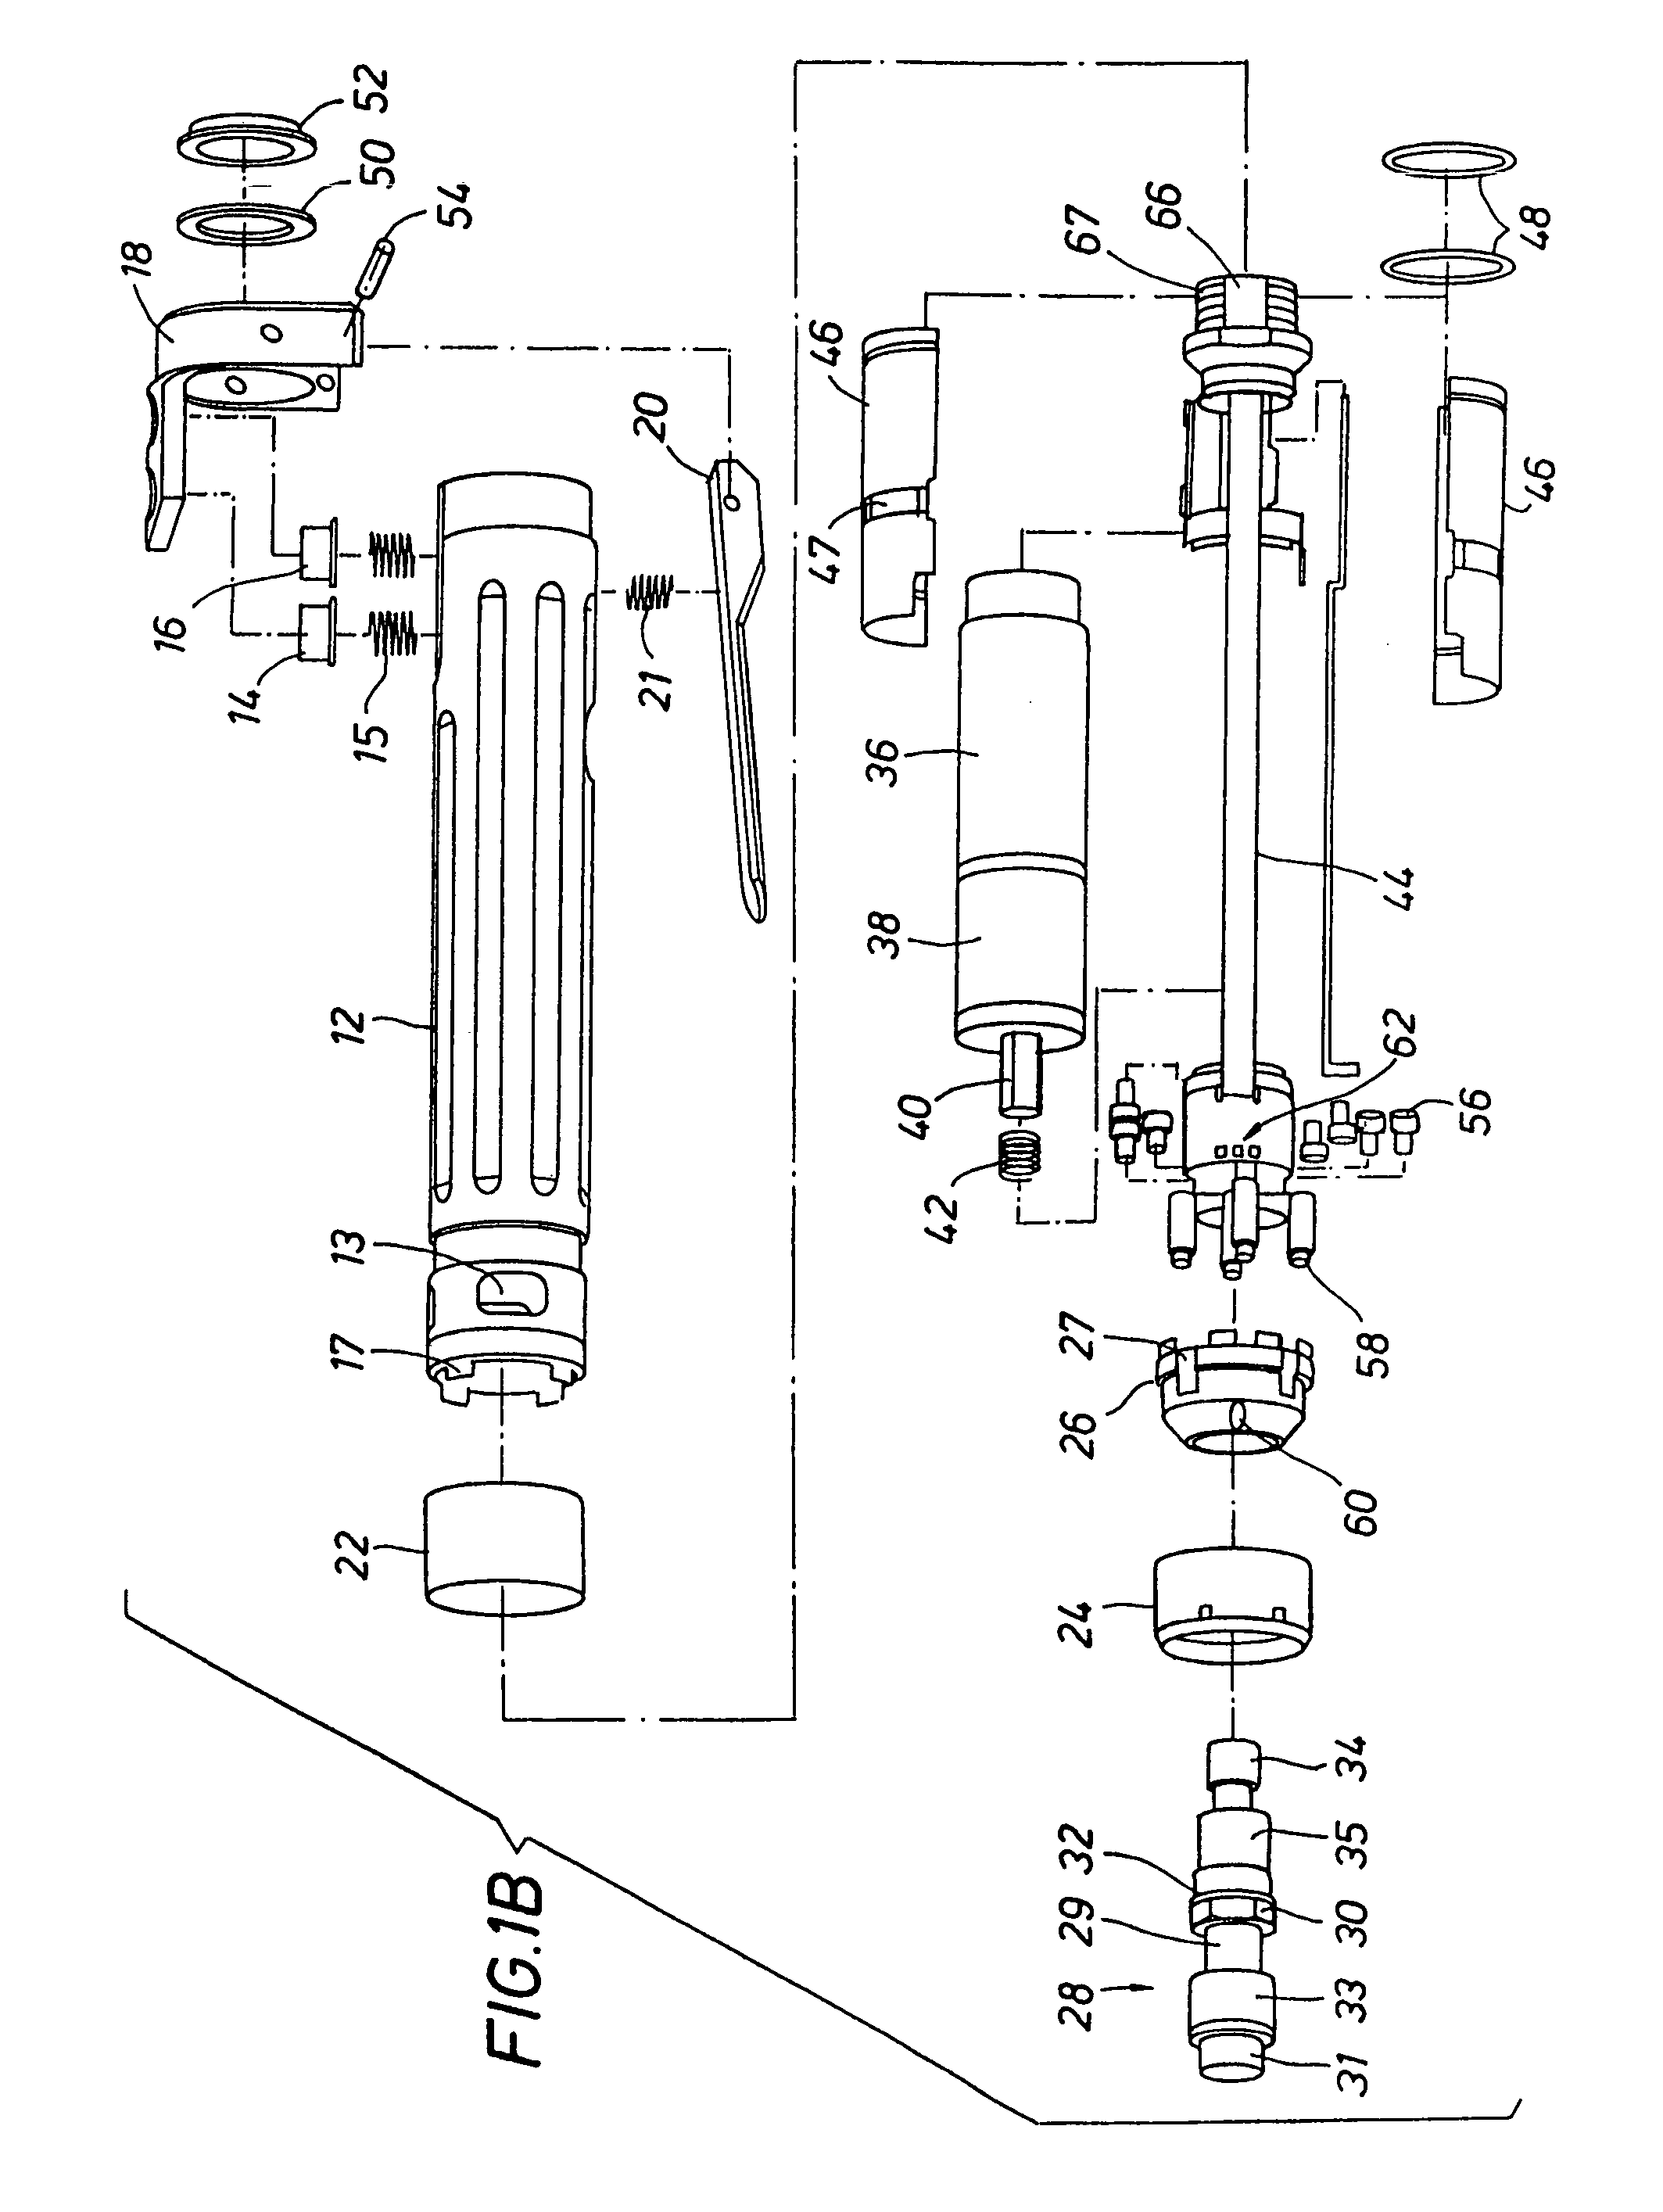 Tranducerized torque wrench